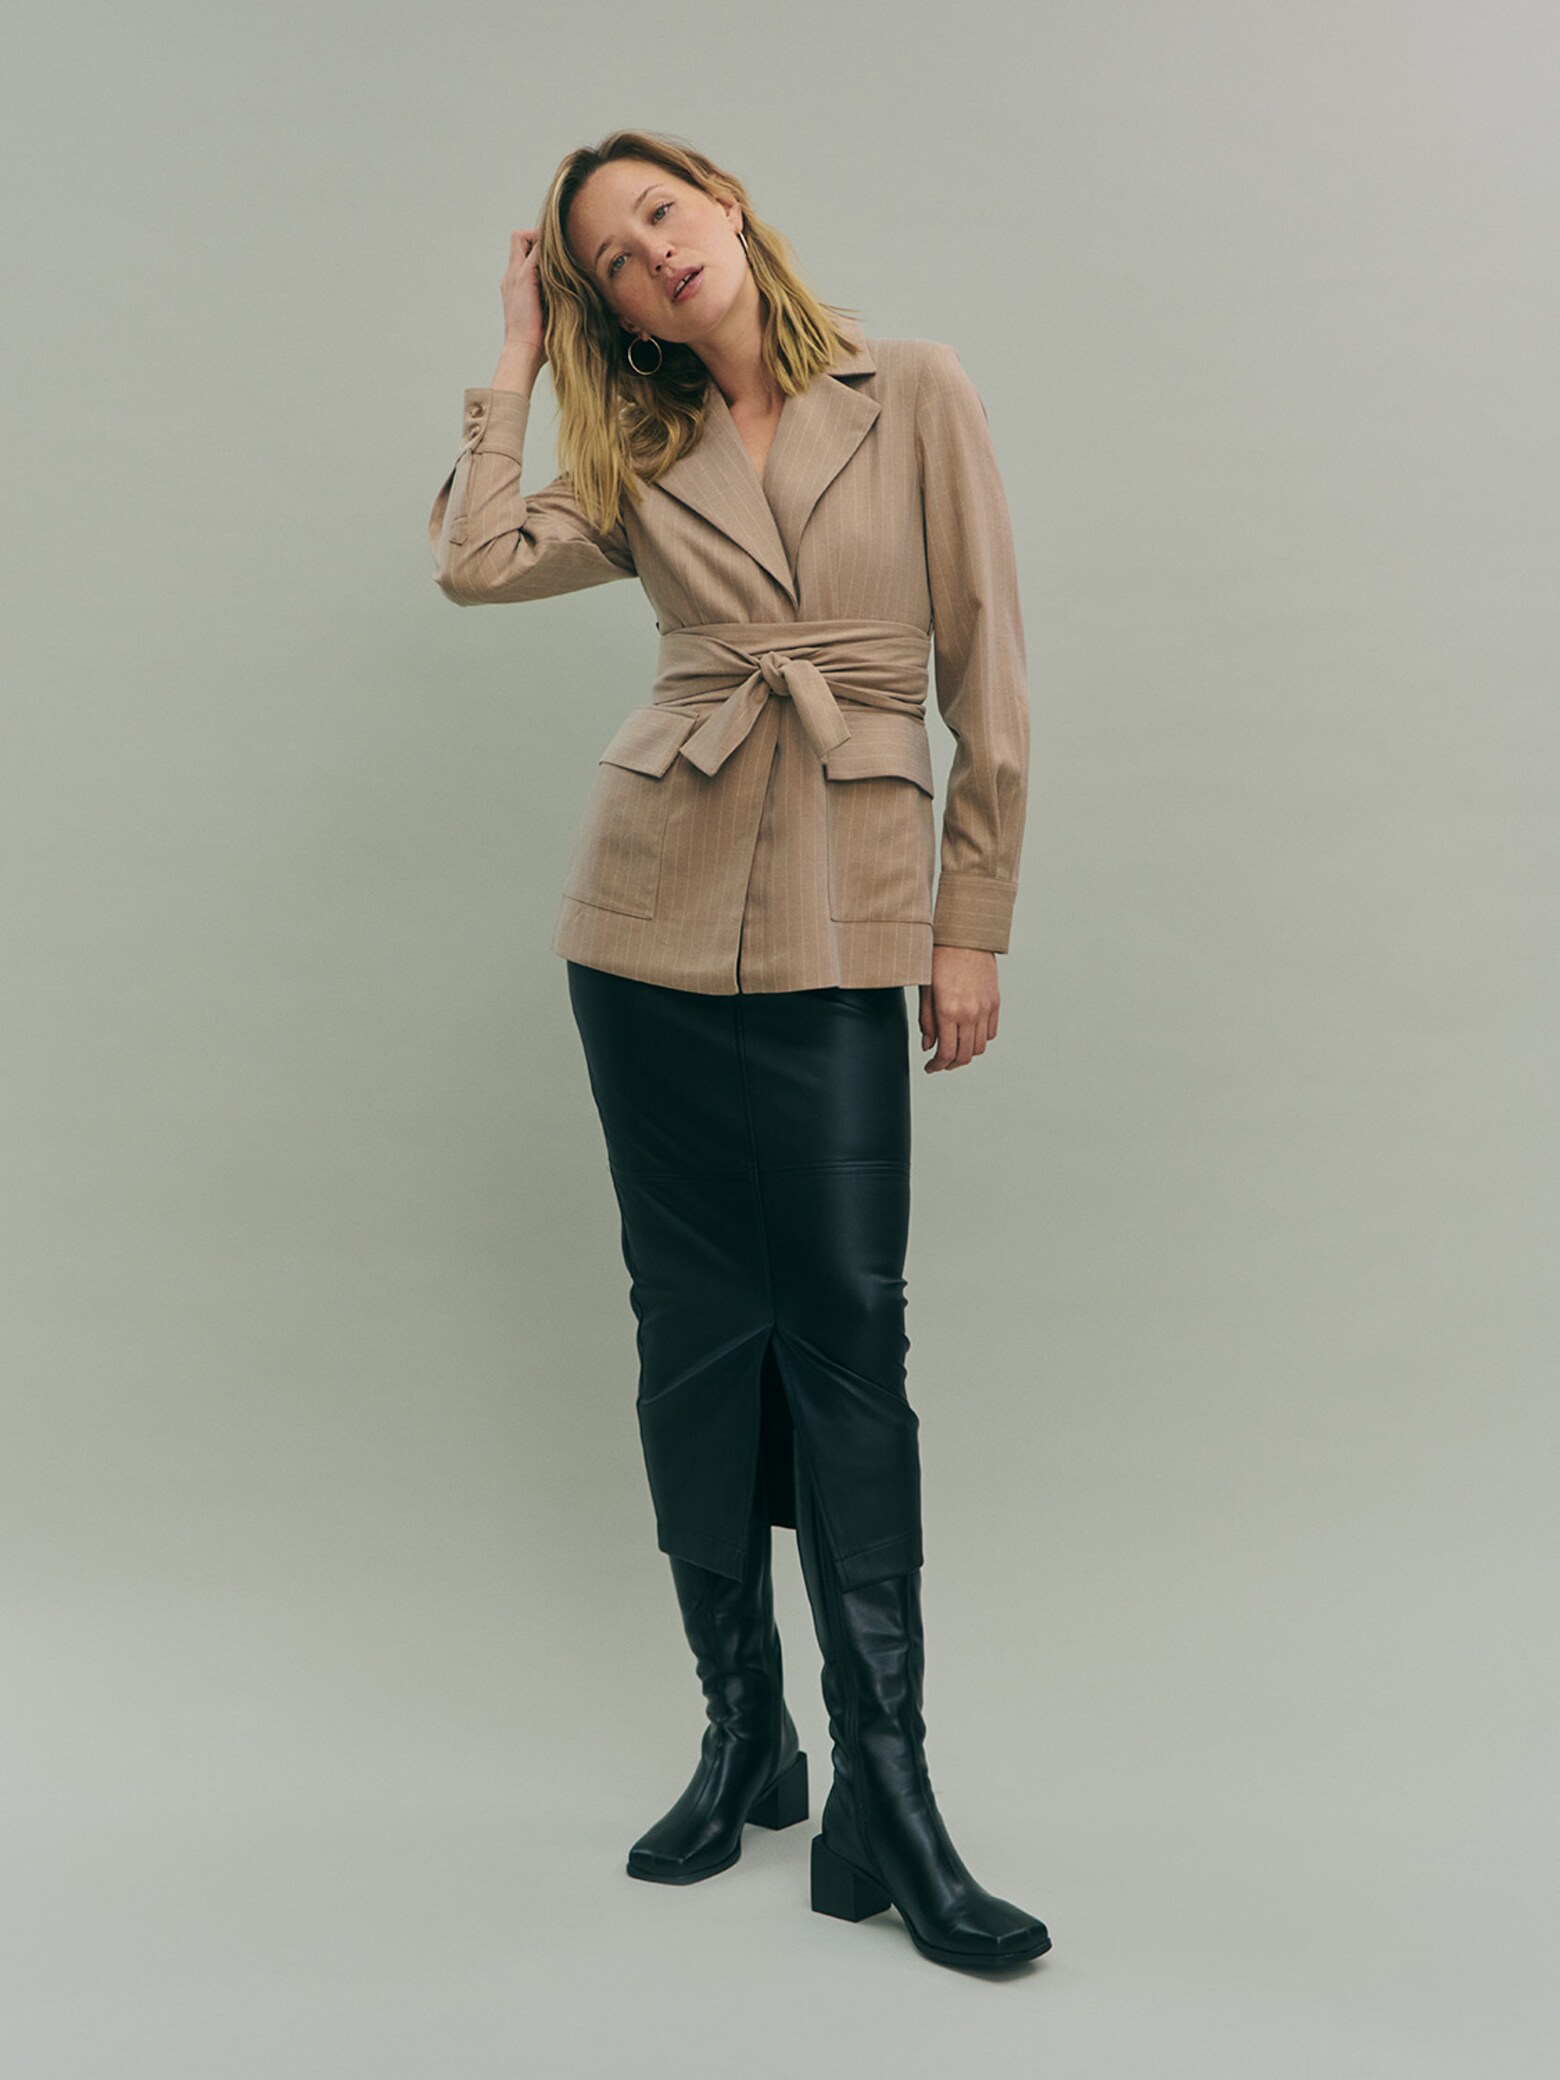 Jennifer - Classy Leathery Business Look